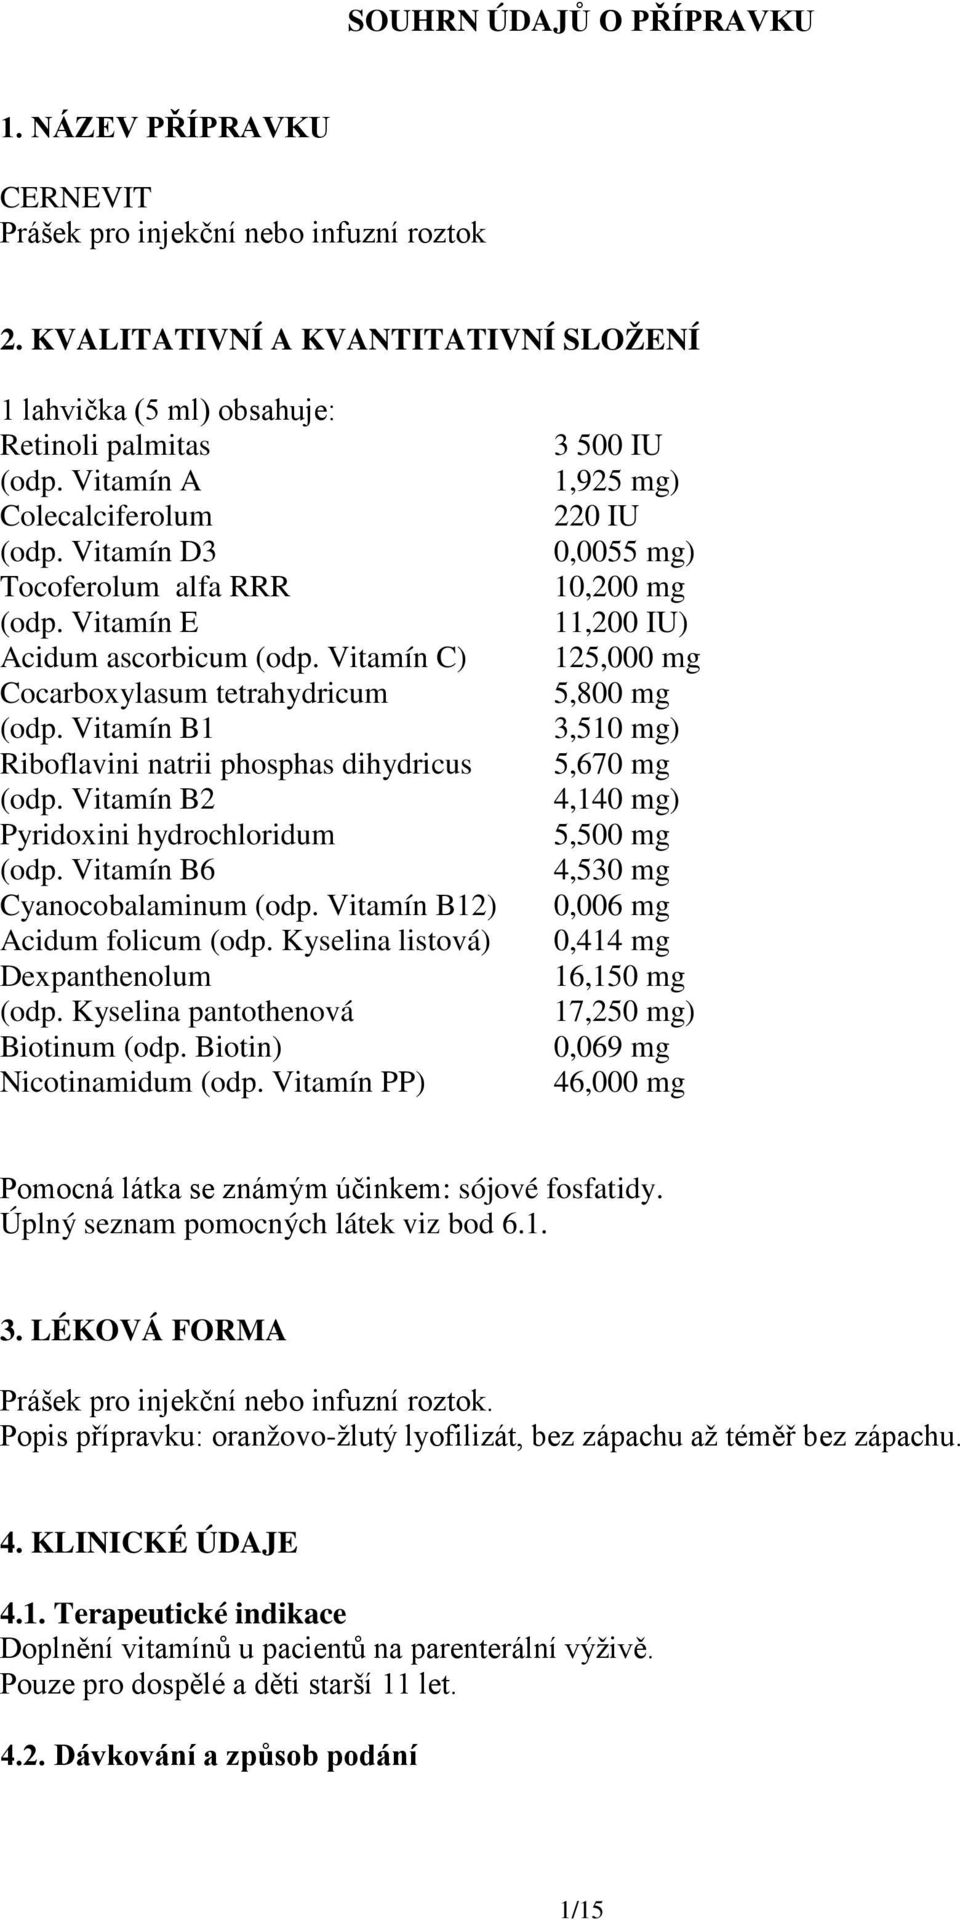 Vitamín B1 Riboflavini natrii phosphas dihydricus (odp. Vitamín B2 Pyridoxini hydrochloridum (odp. Vitamín B6 Cyanocobalaminum (odp. Vitamín B12) Acidum folicum (odp.